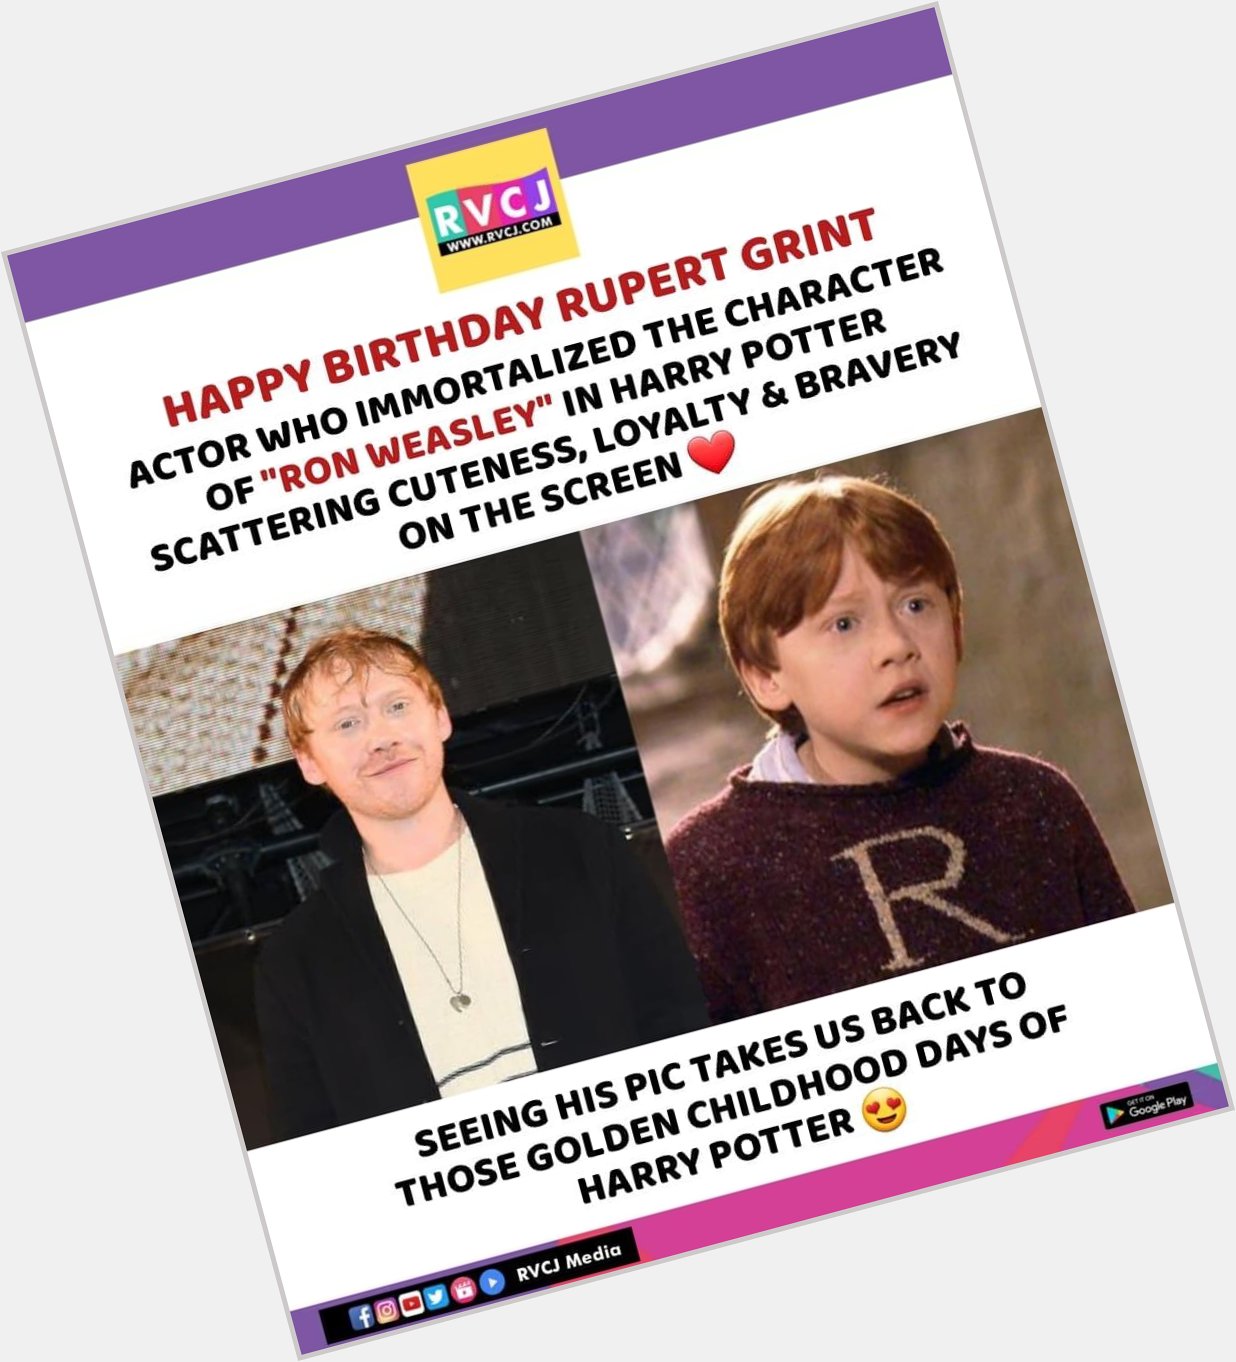 Happy Birthday Rupert Grint        